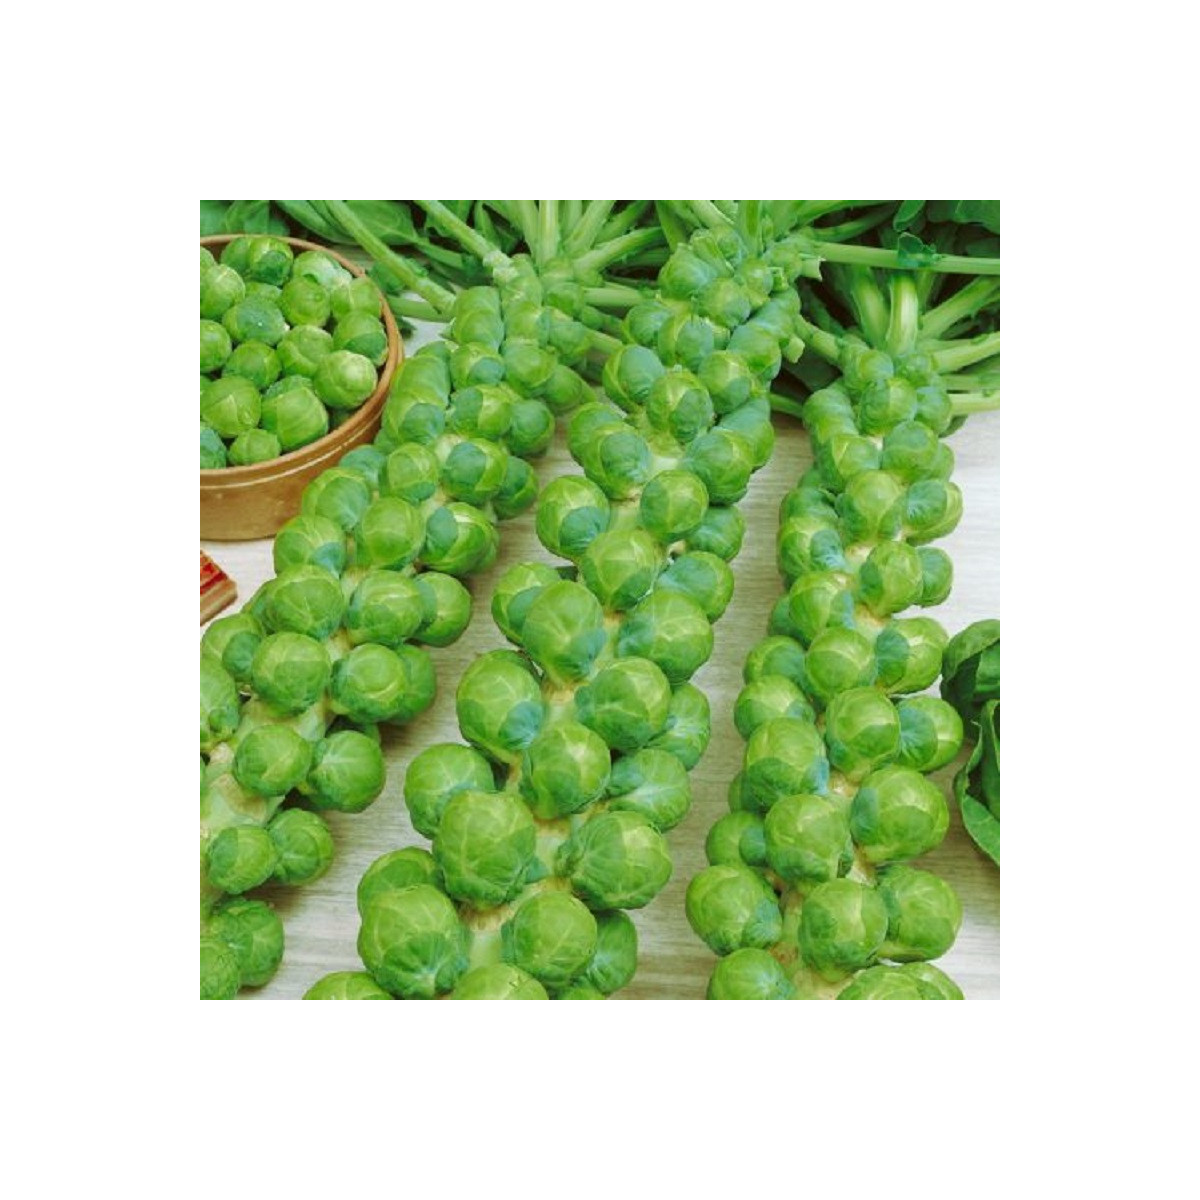 Kapusta růžičková Danet F1 - Brassica oleracea - semena kapusty - 40 ks